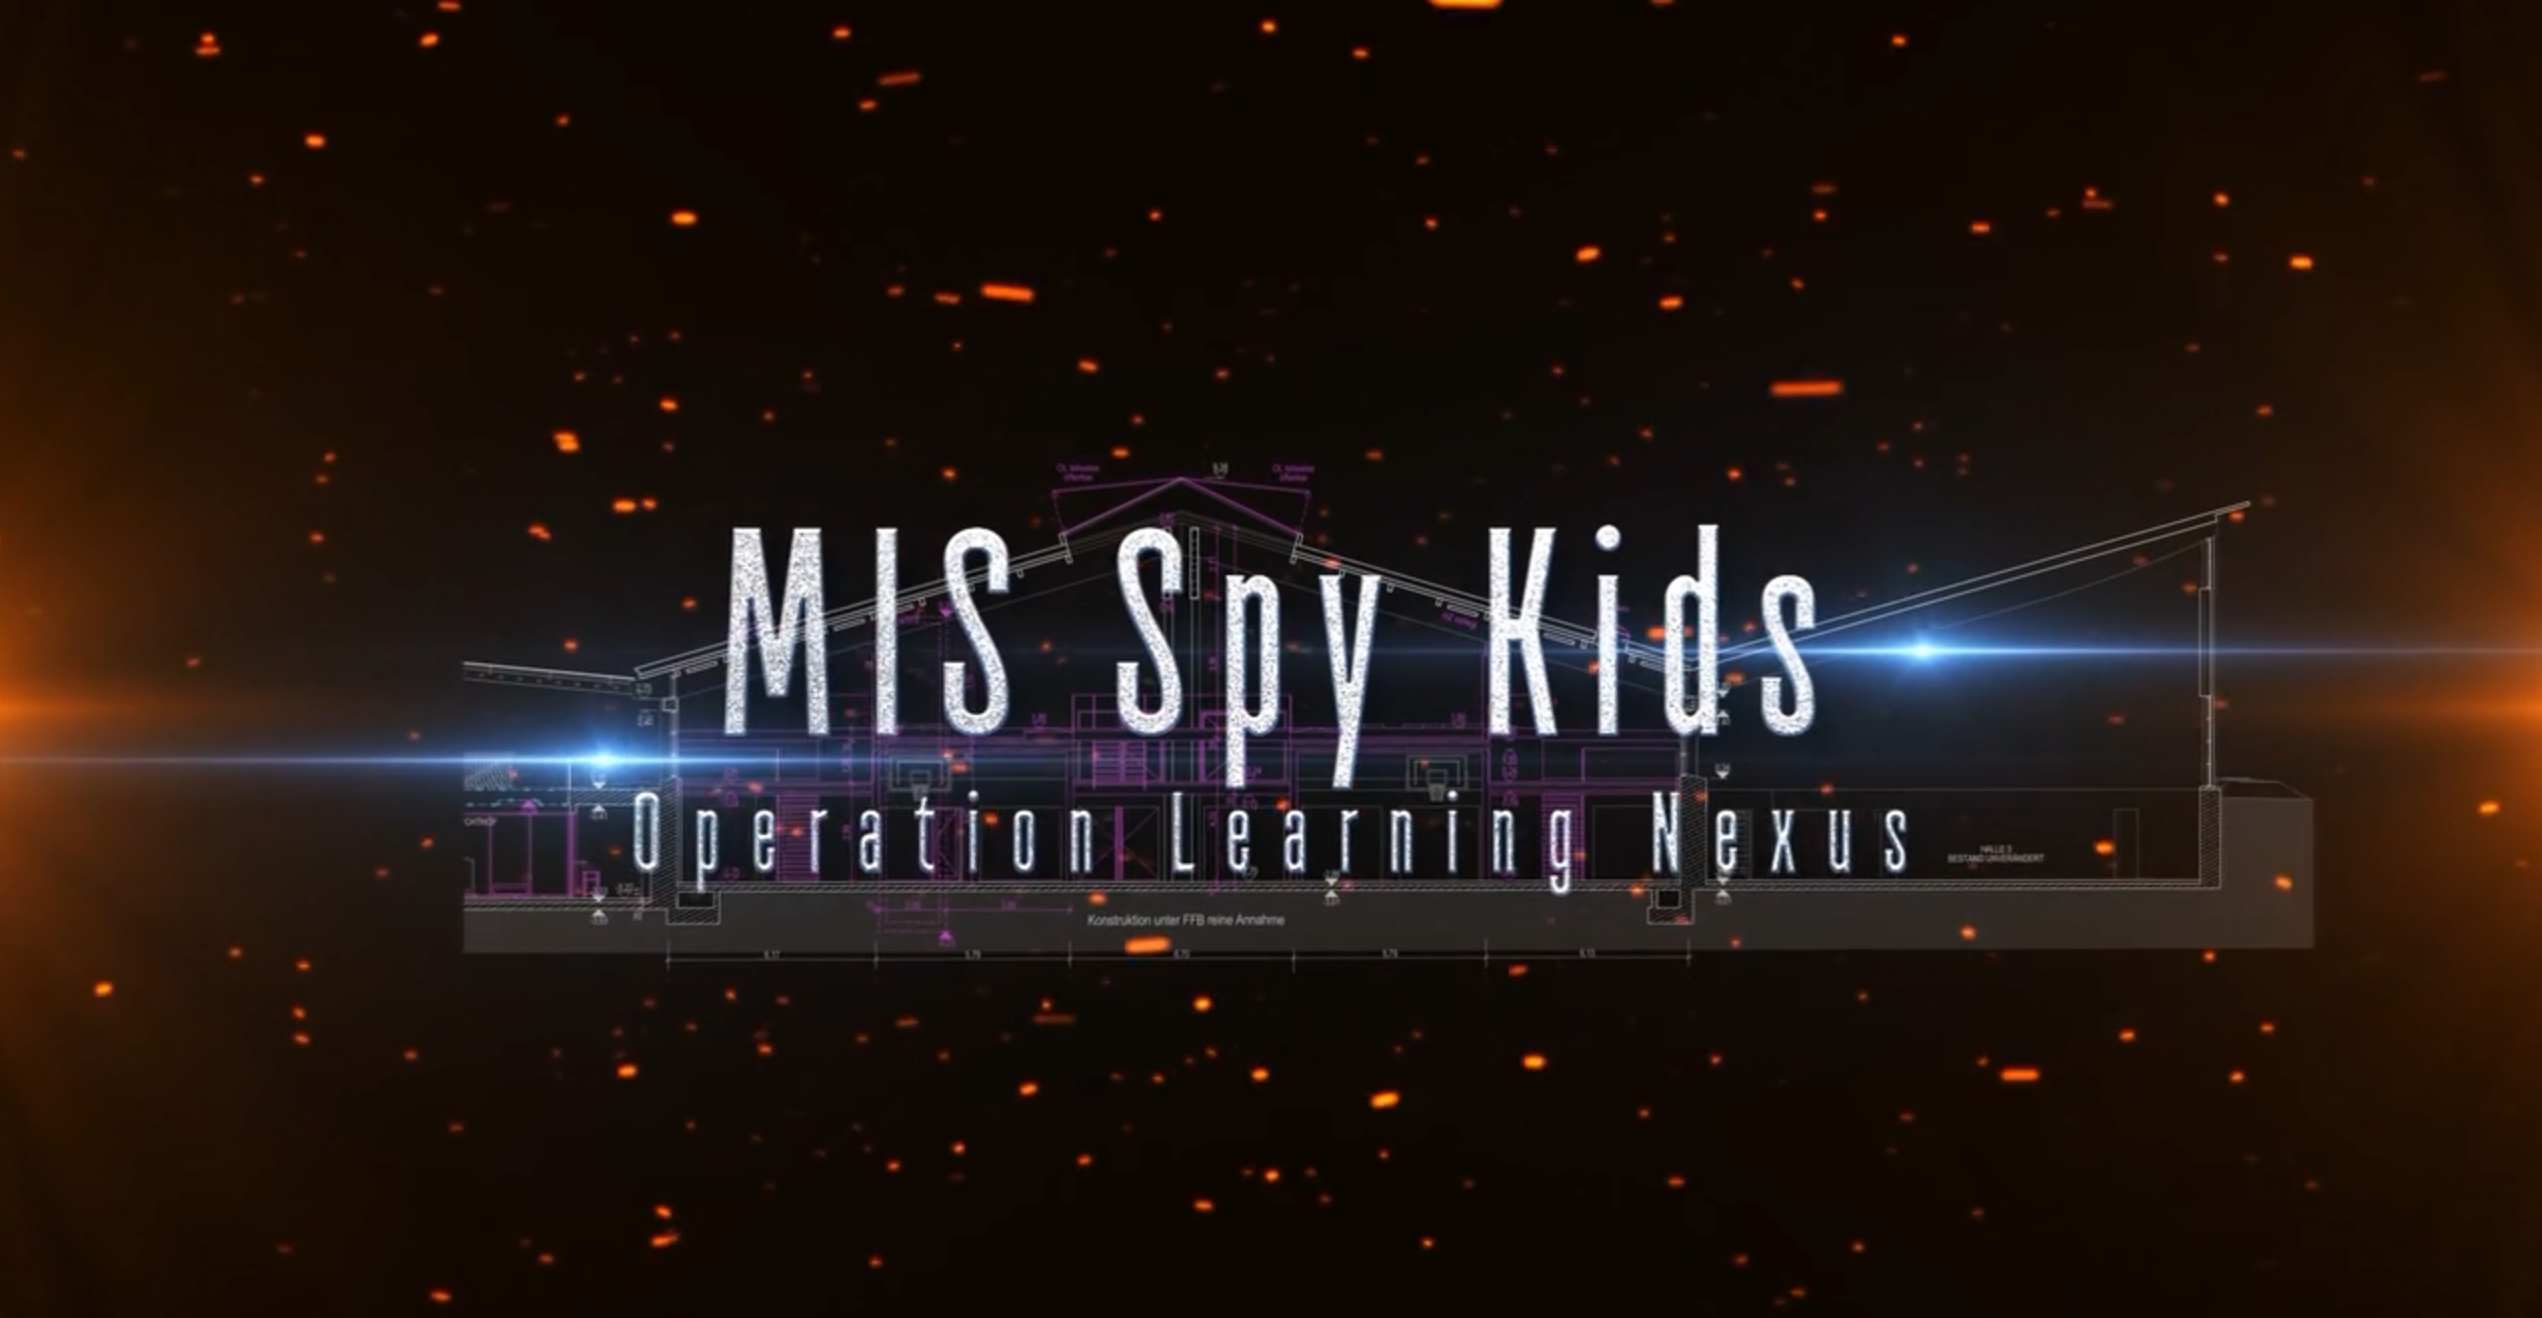 MIS Spy Kids - Operation: Learning Nexus